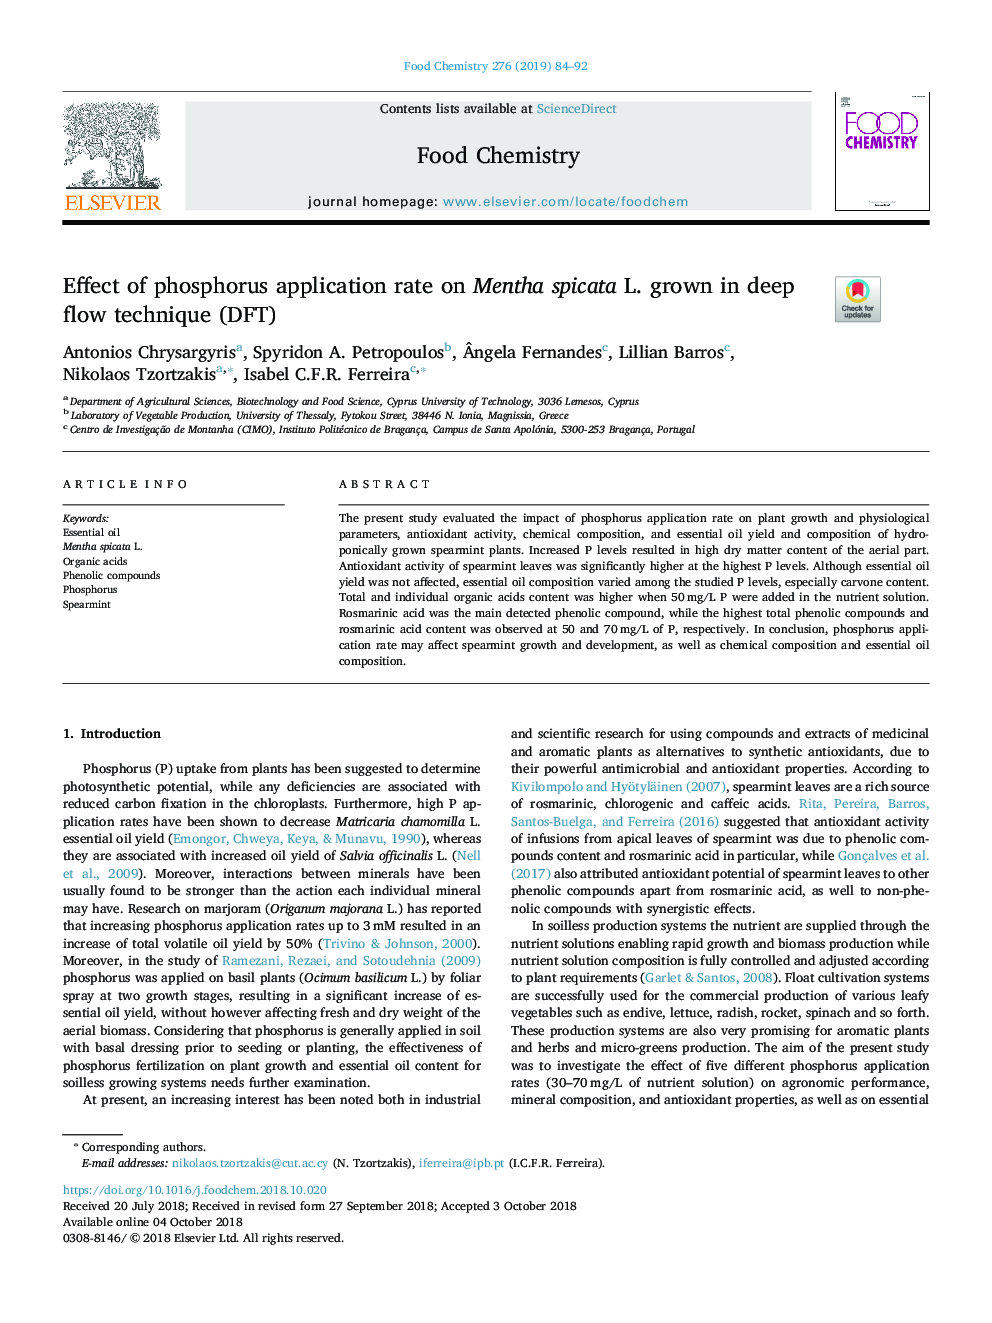 Effect of phosphorus application rate on Mentha spicata L. grown in deep flow technique (DFT)